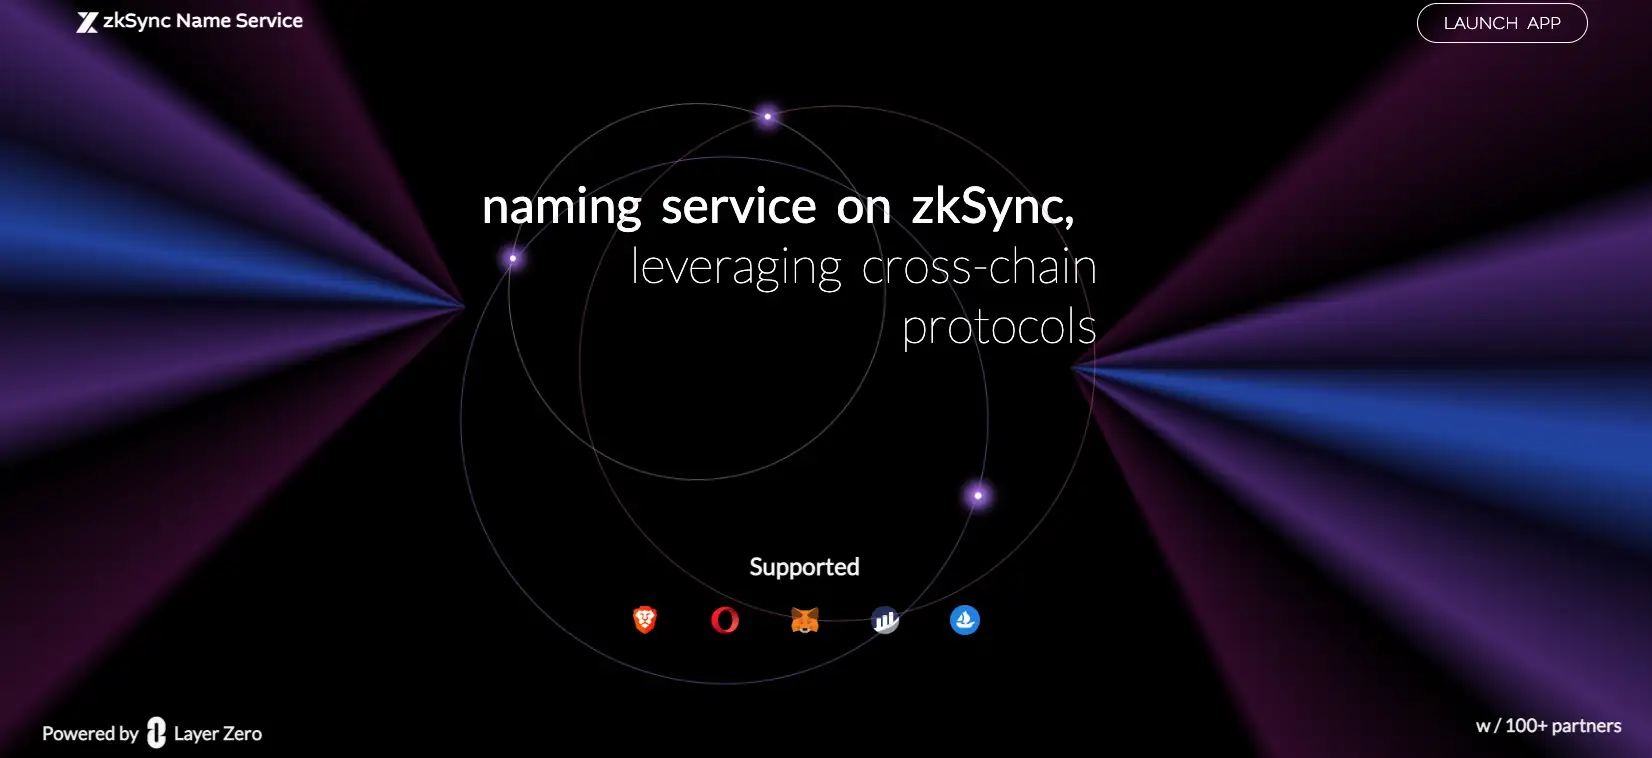 zkSync Name Service